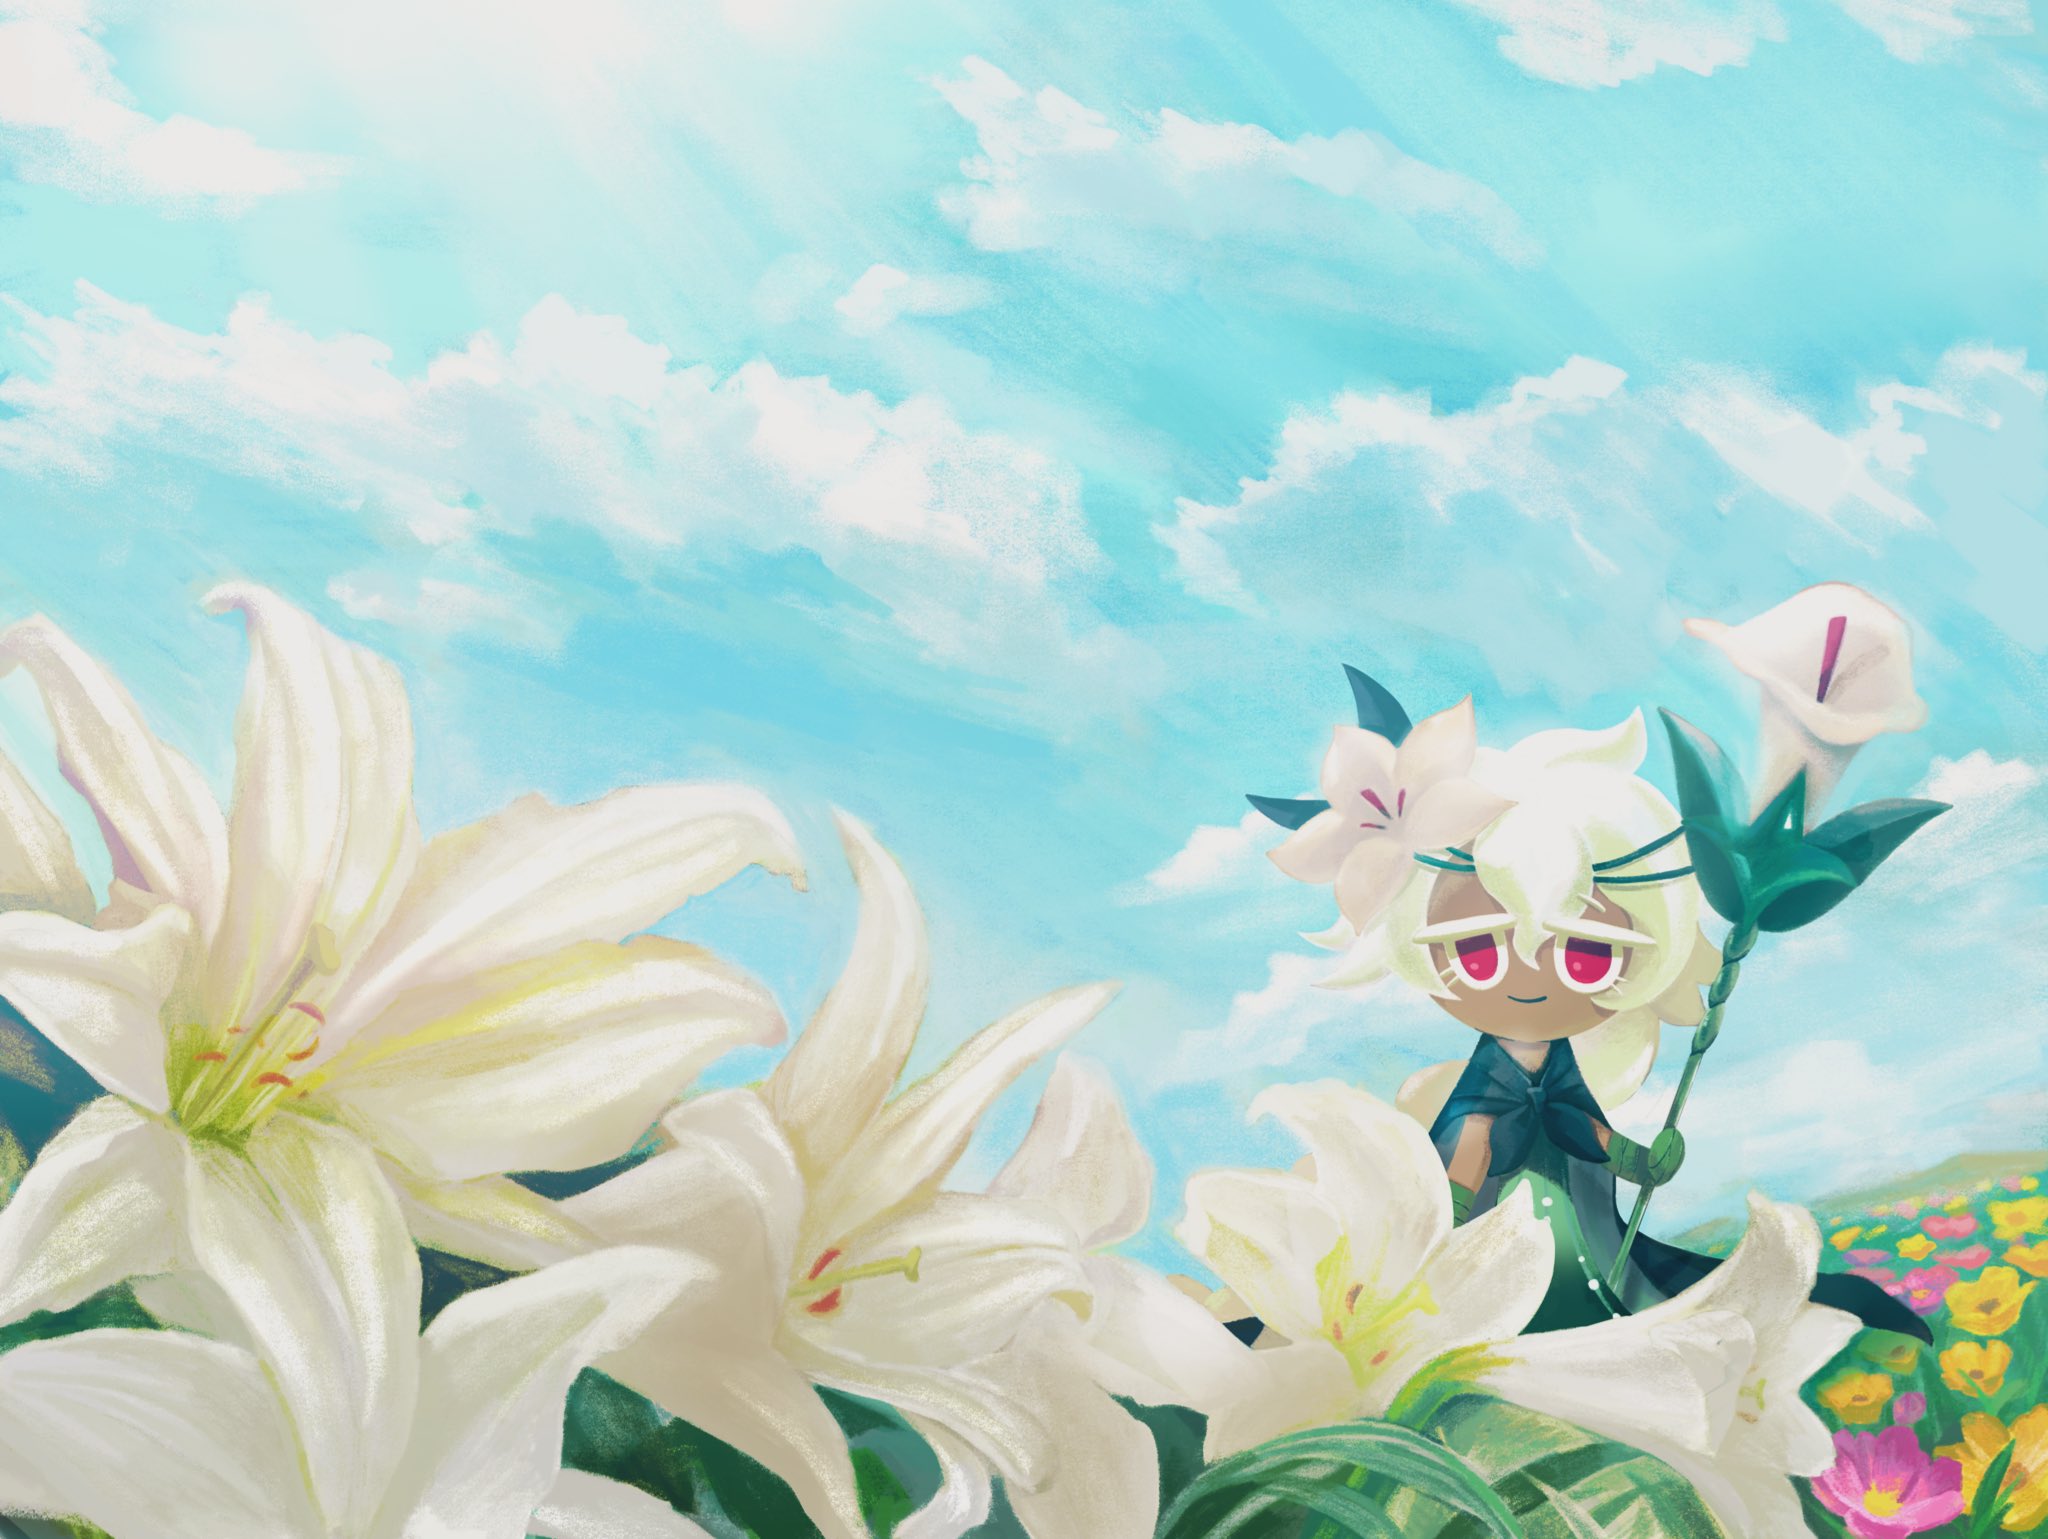 White Lily Cookie Run: Kingdom Anime Image Board